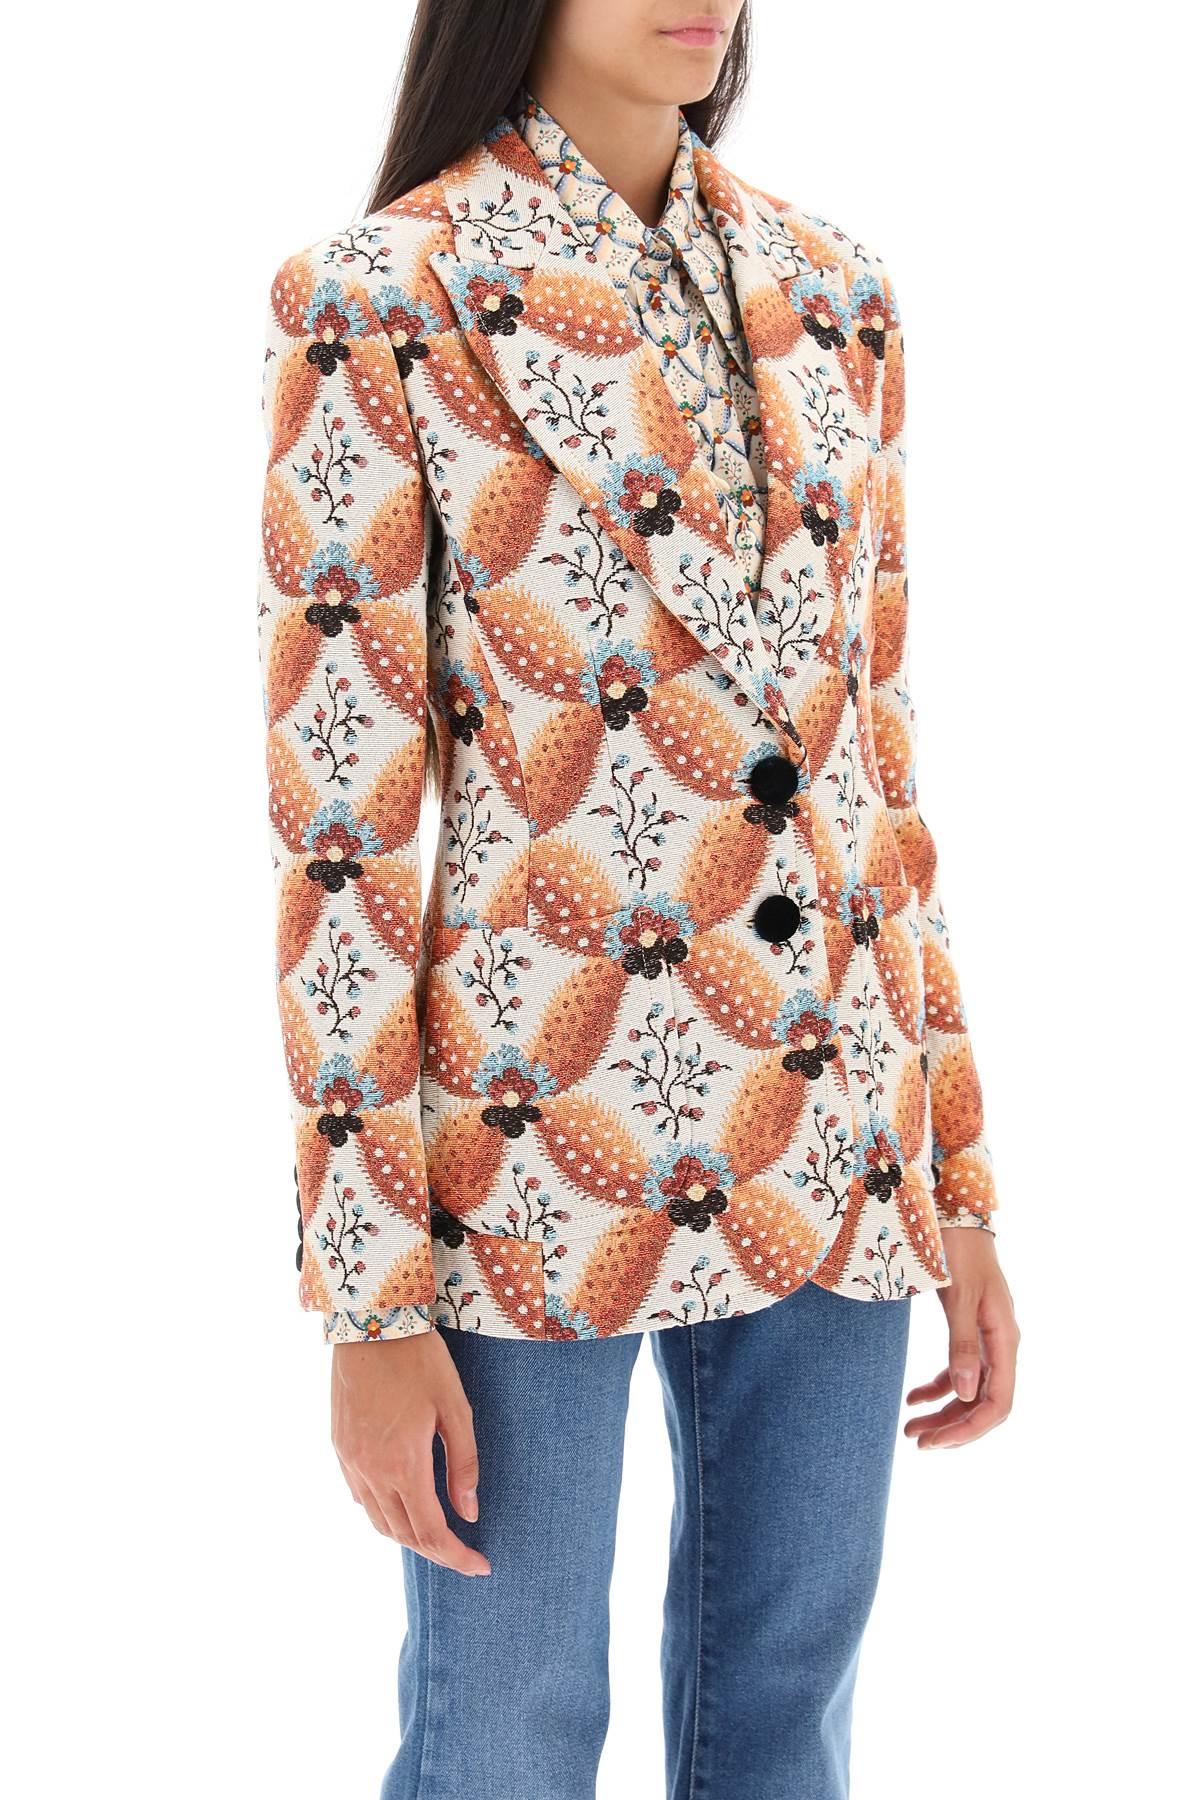 Etro jacquard jacket with floral motif-1